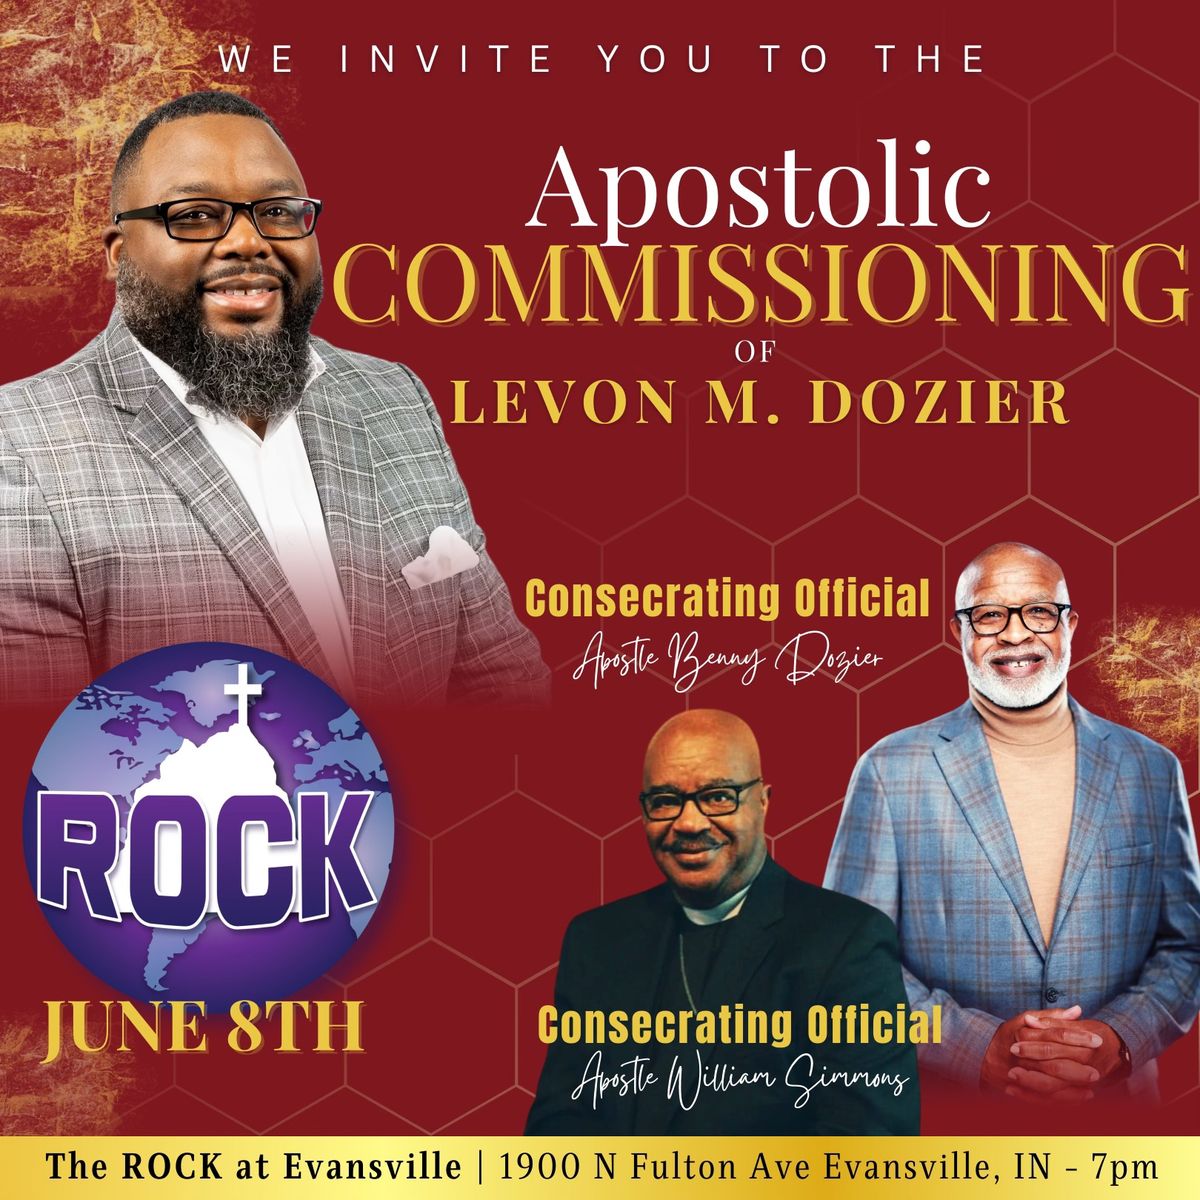 Apostolic Commissioning of Levon M. Dozier